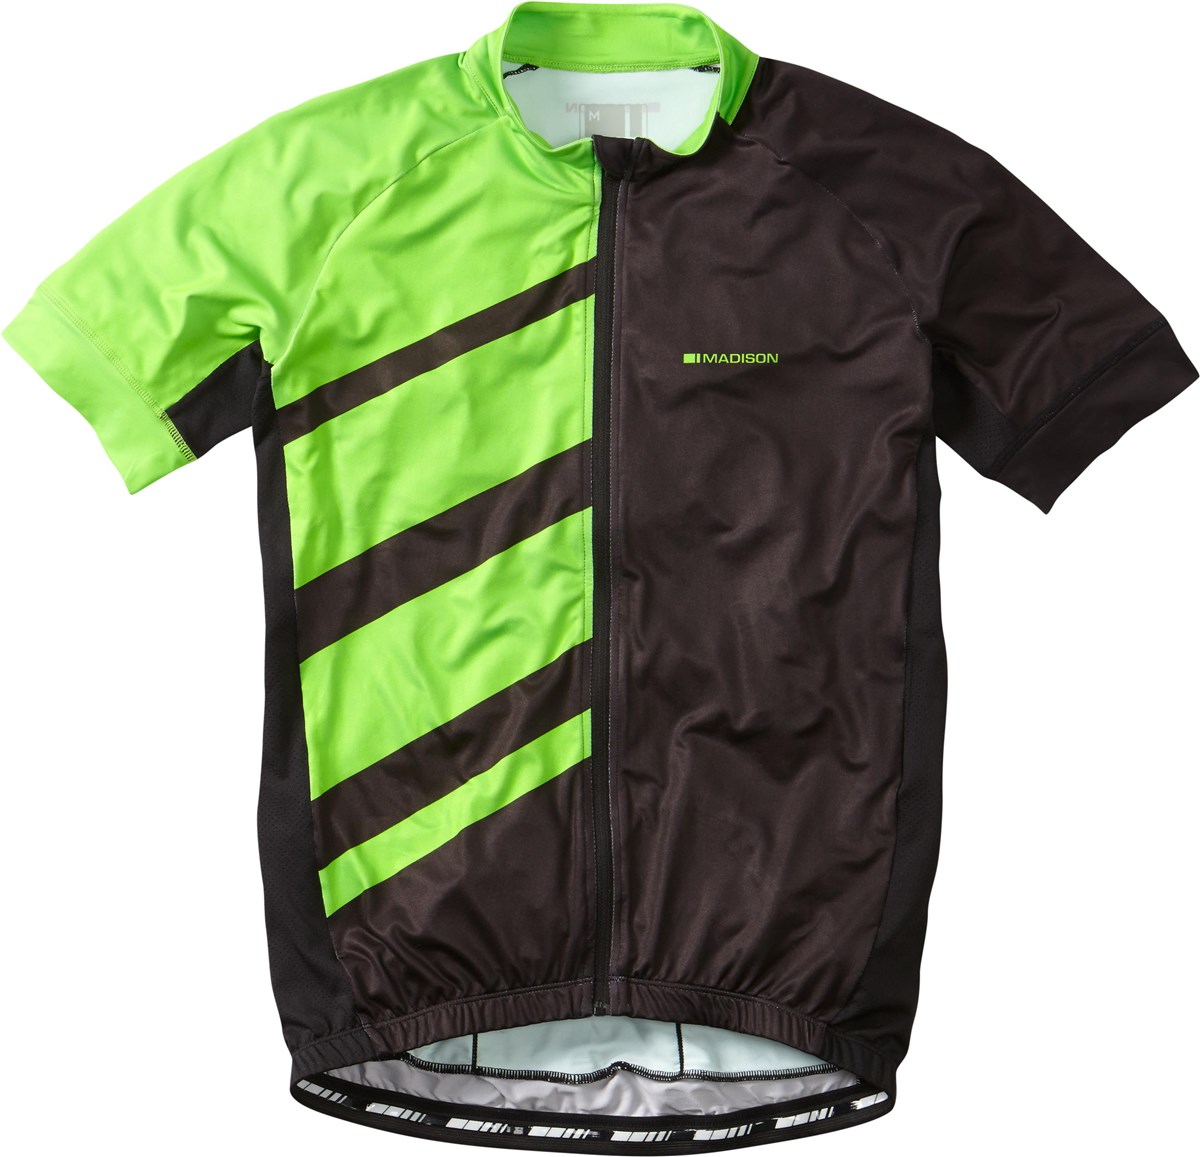 Madison Sportive Race Short Sleeve Jersey product image